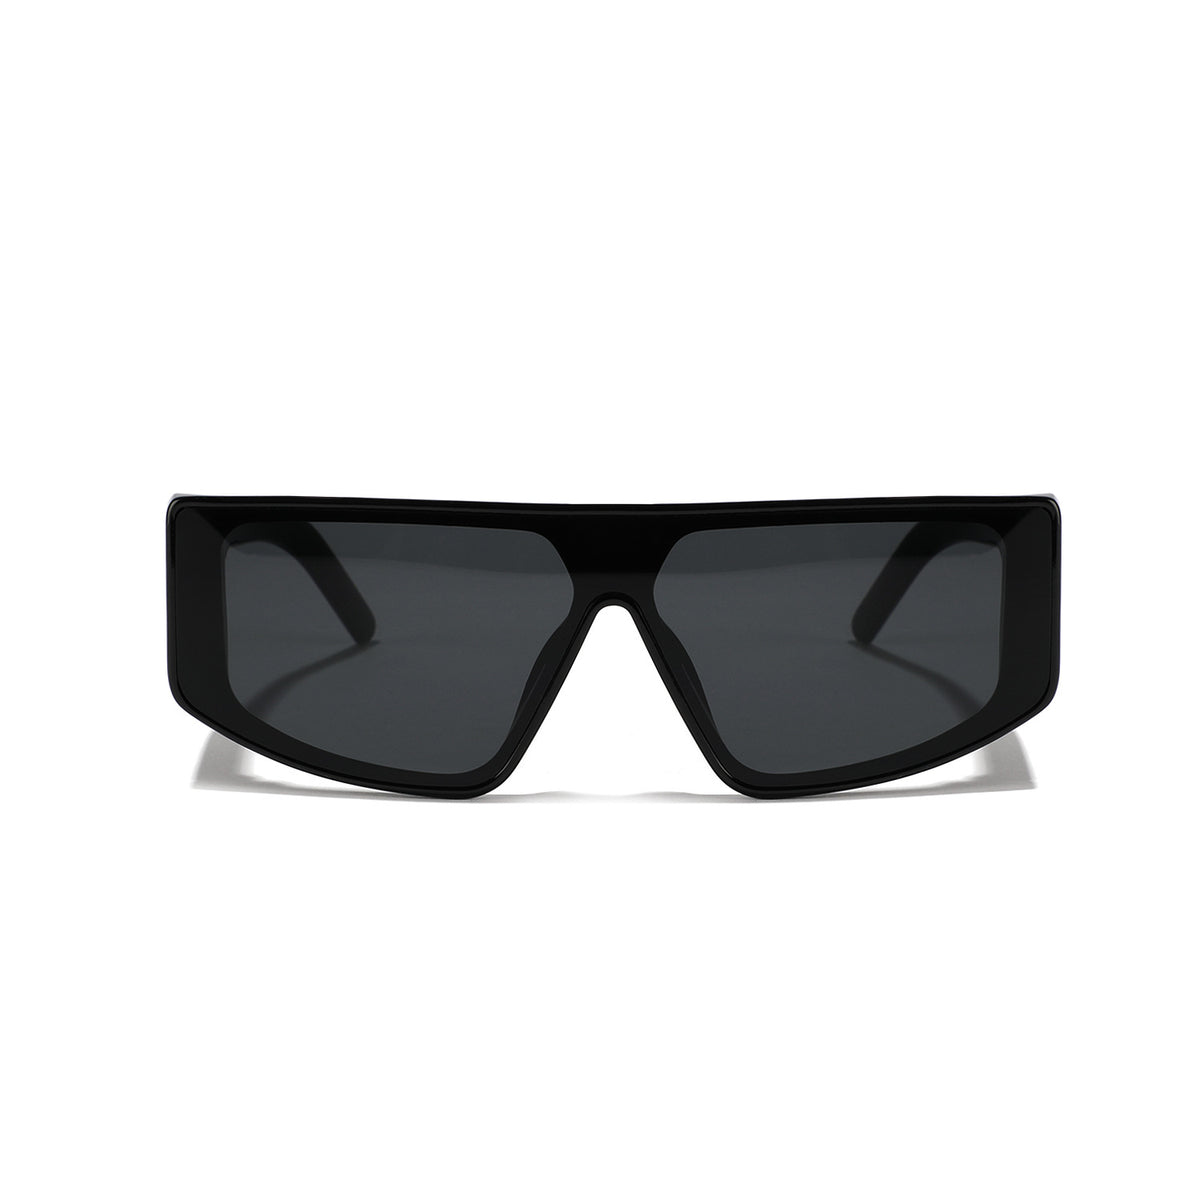 Men's Oversized One-piece Sunglasses Rivet